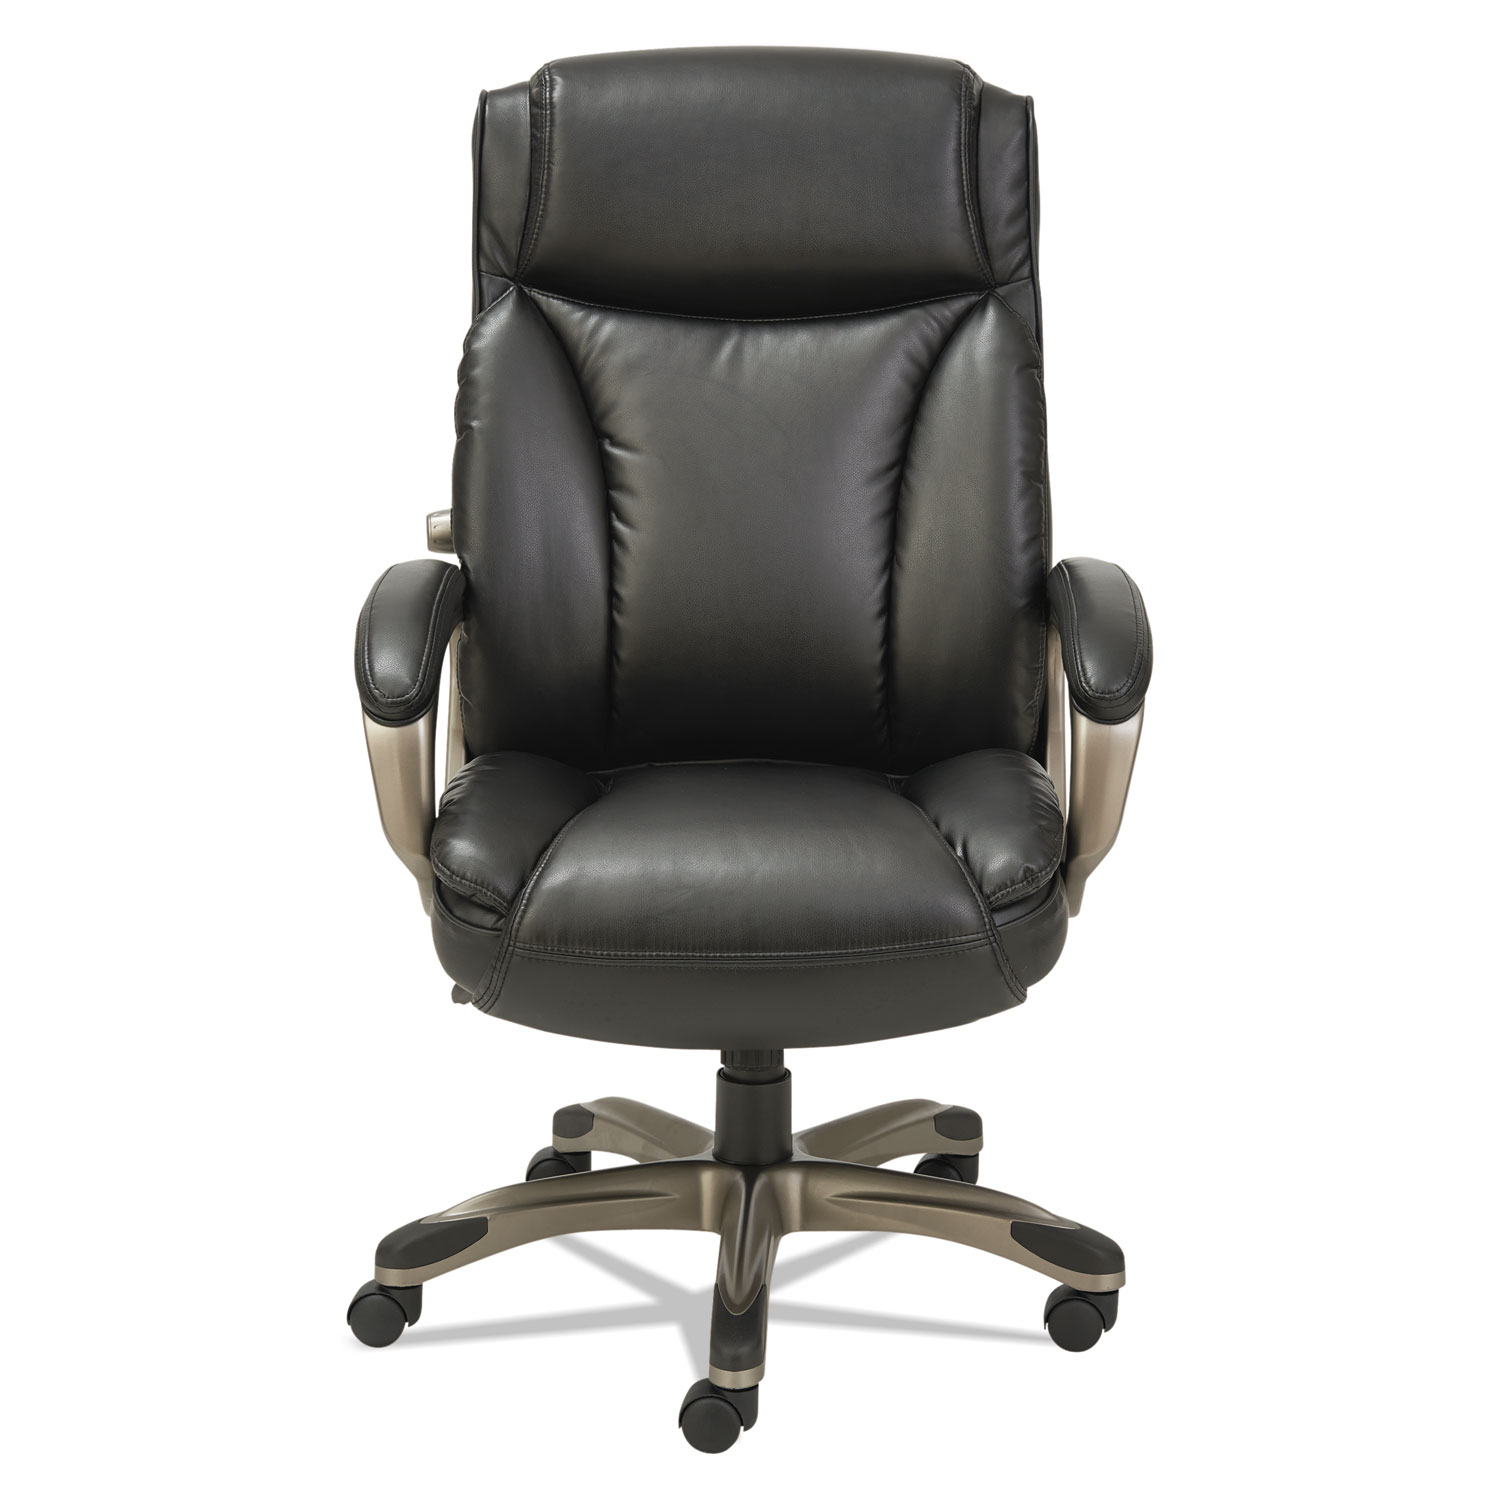 Alera Veon Series Executive HighBack Leather Chair, Coil Spring Cushioning,Black